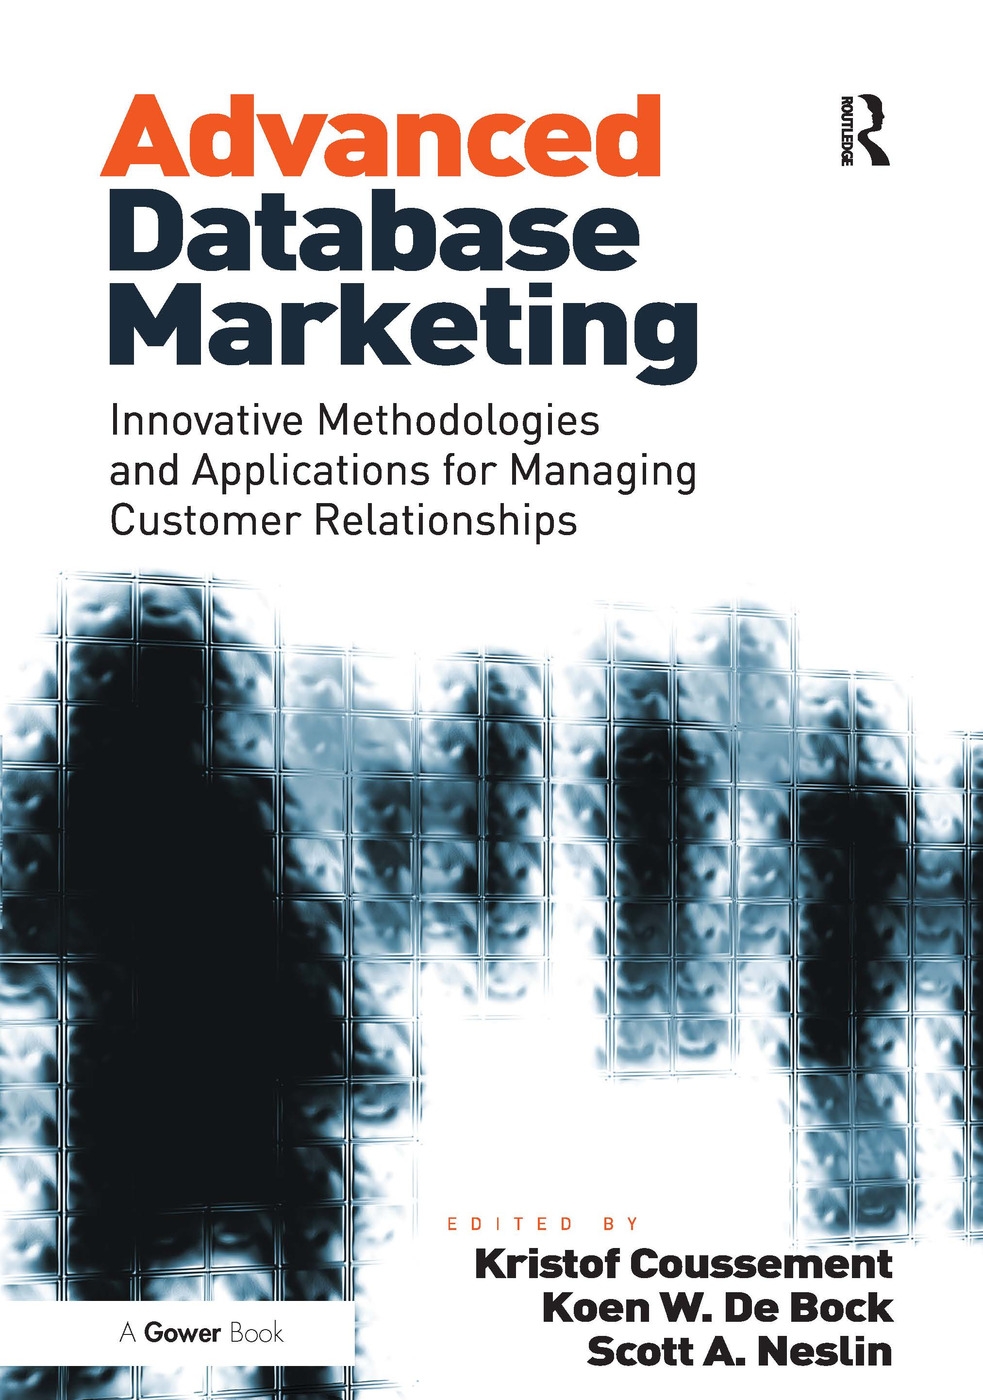 Advanced Database Marketing: Innovative Methodologies and Applications for Managing Customer Relationships